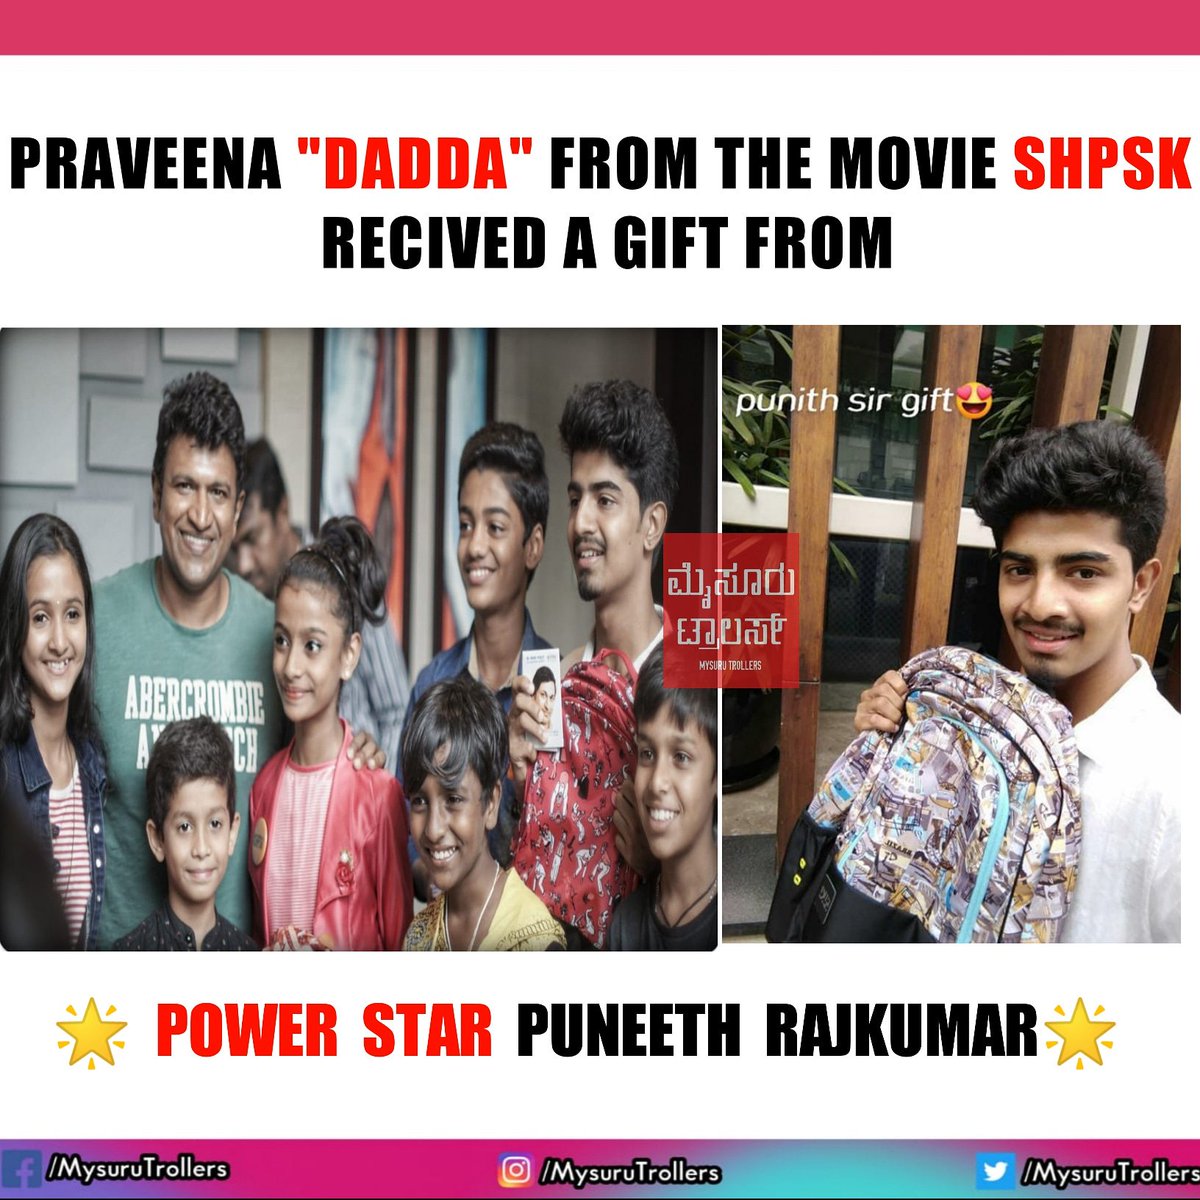 #DADDA from #SHPSK received gift from #PuneethRajkumar 
@PowerStarPunith  @shetty_rishab